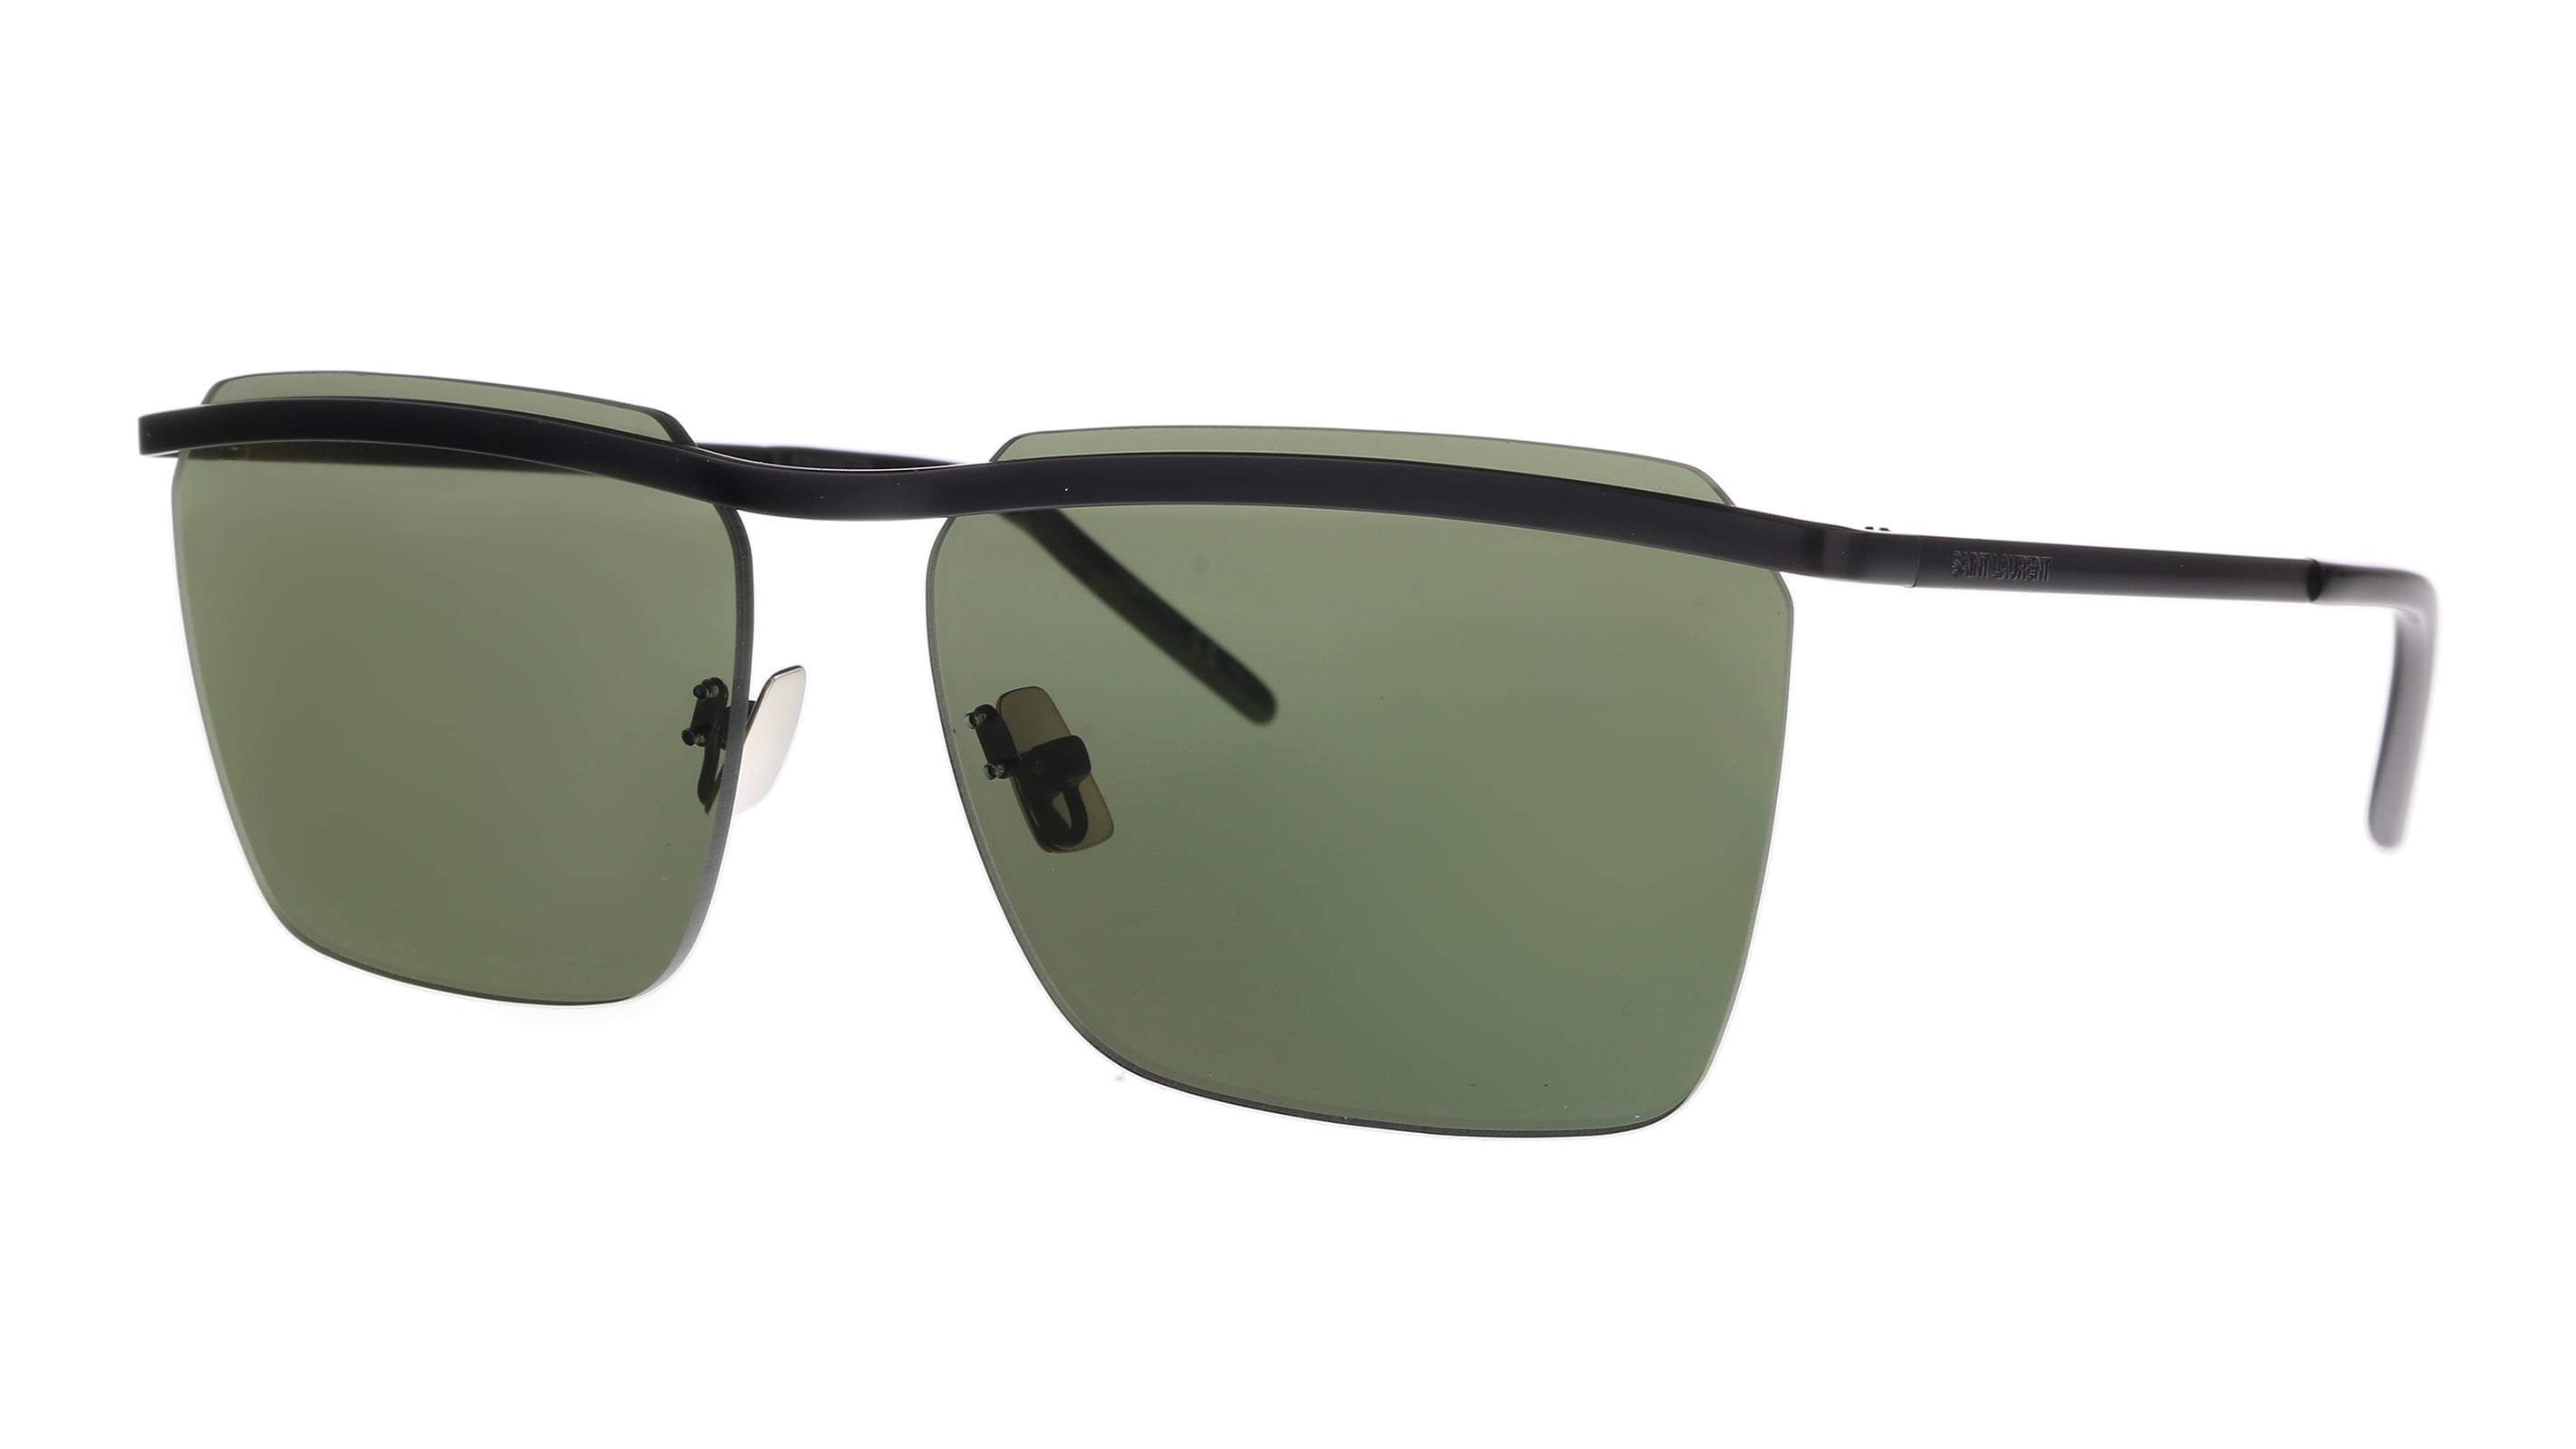 Saint Laurent Unisex SL431 Fashion 57mm Sunglasses 